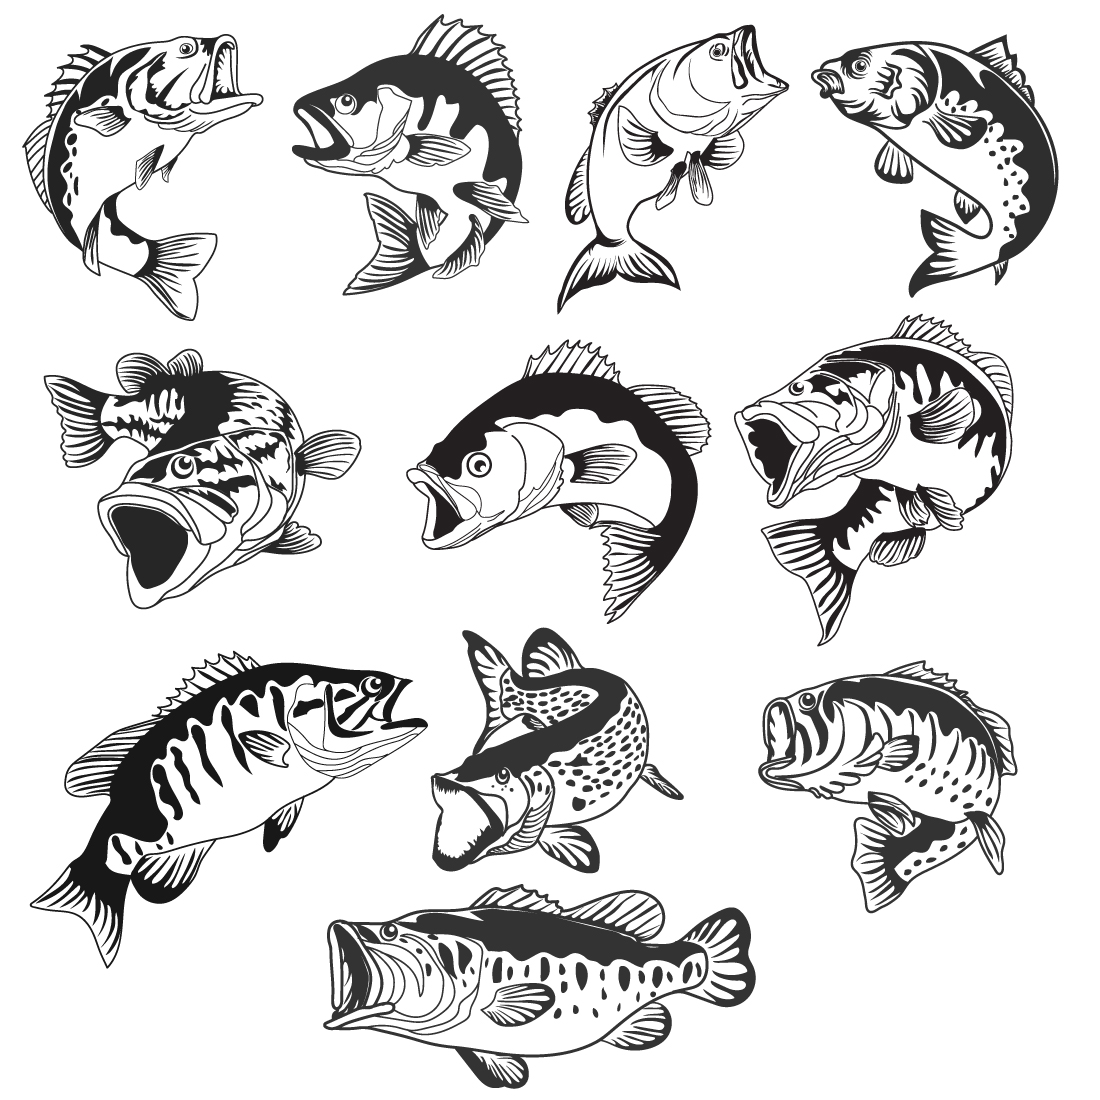 Bass fish vector illustration